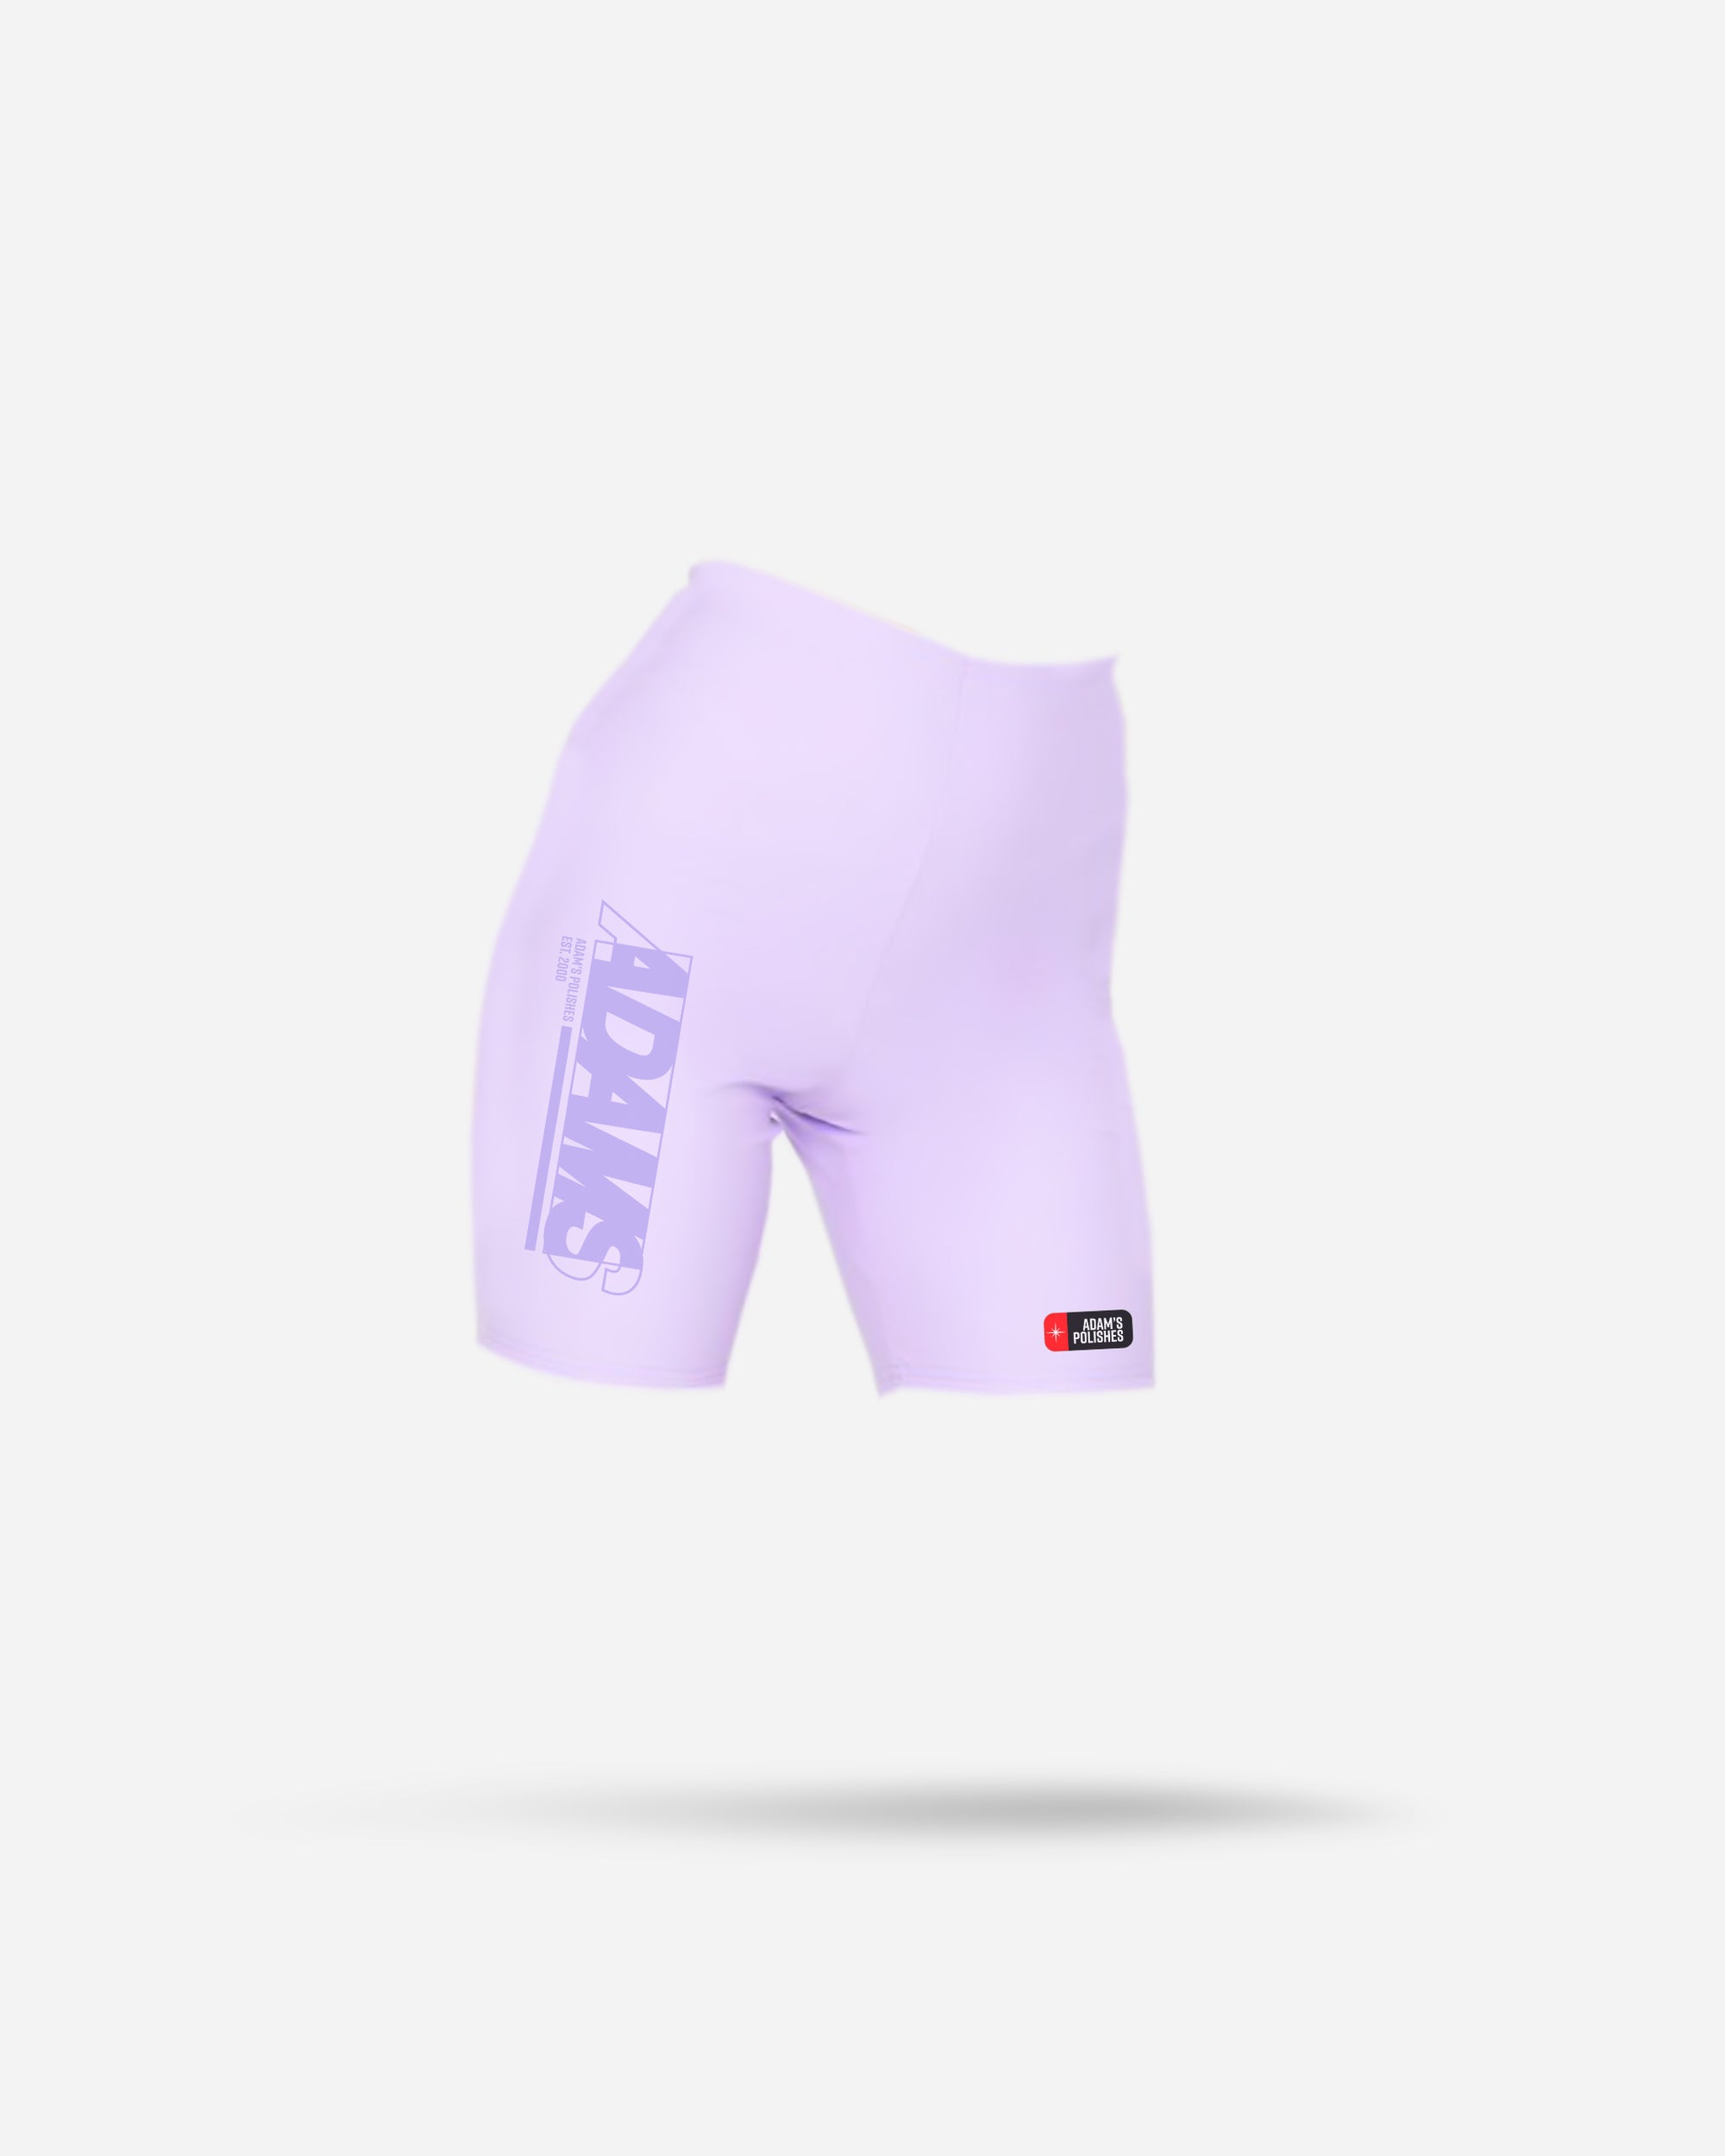 Adam's Lilac Biker Shorts (Womens)